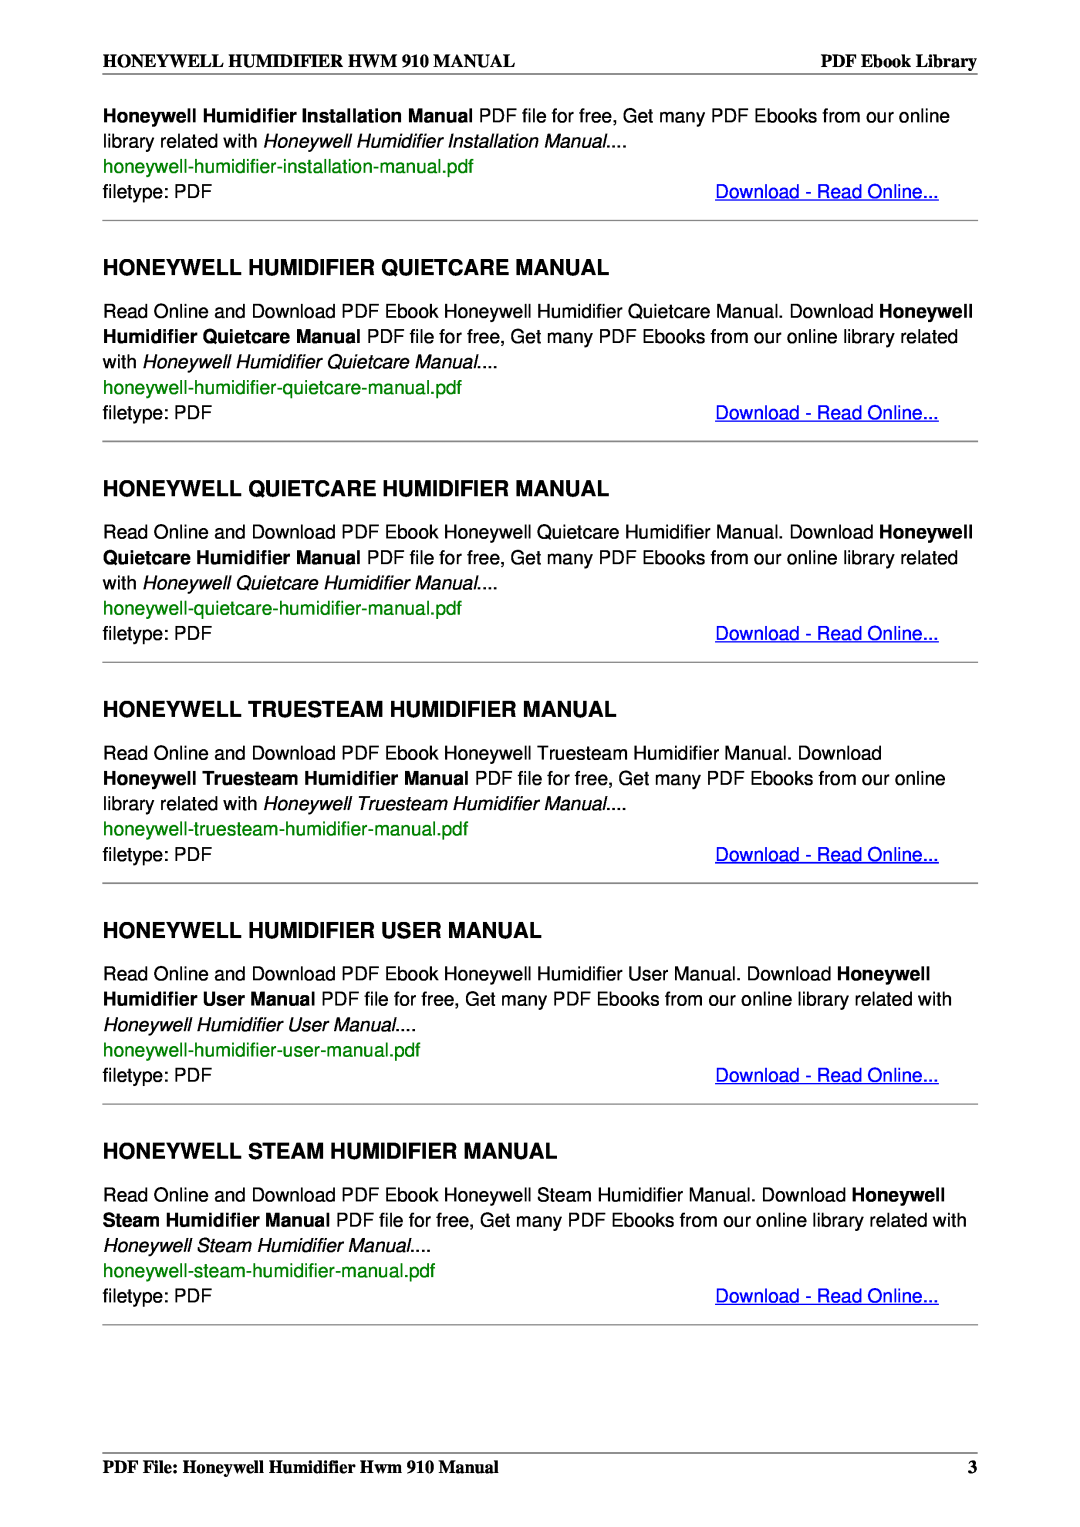 Honeywell HWM910 Honeywell Humidifier Quietcare Manual, Honeywell Quietcare Humidifier Manual, Download - Read Online 